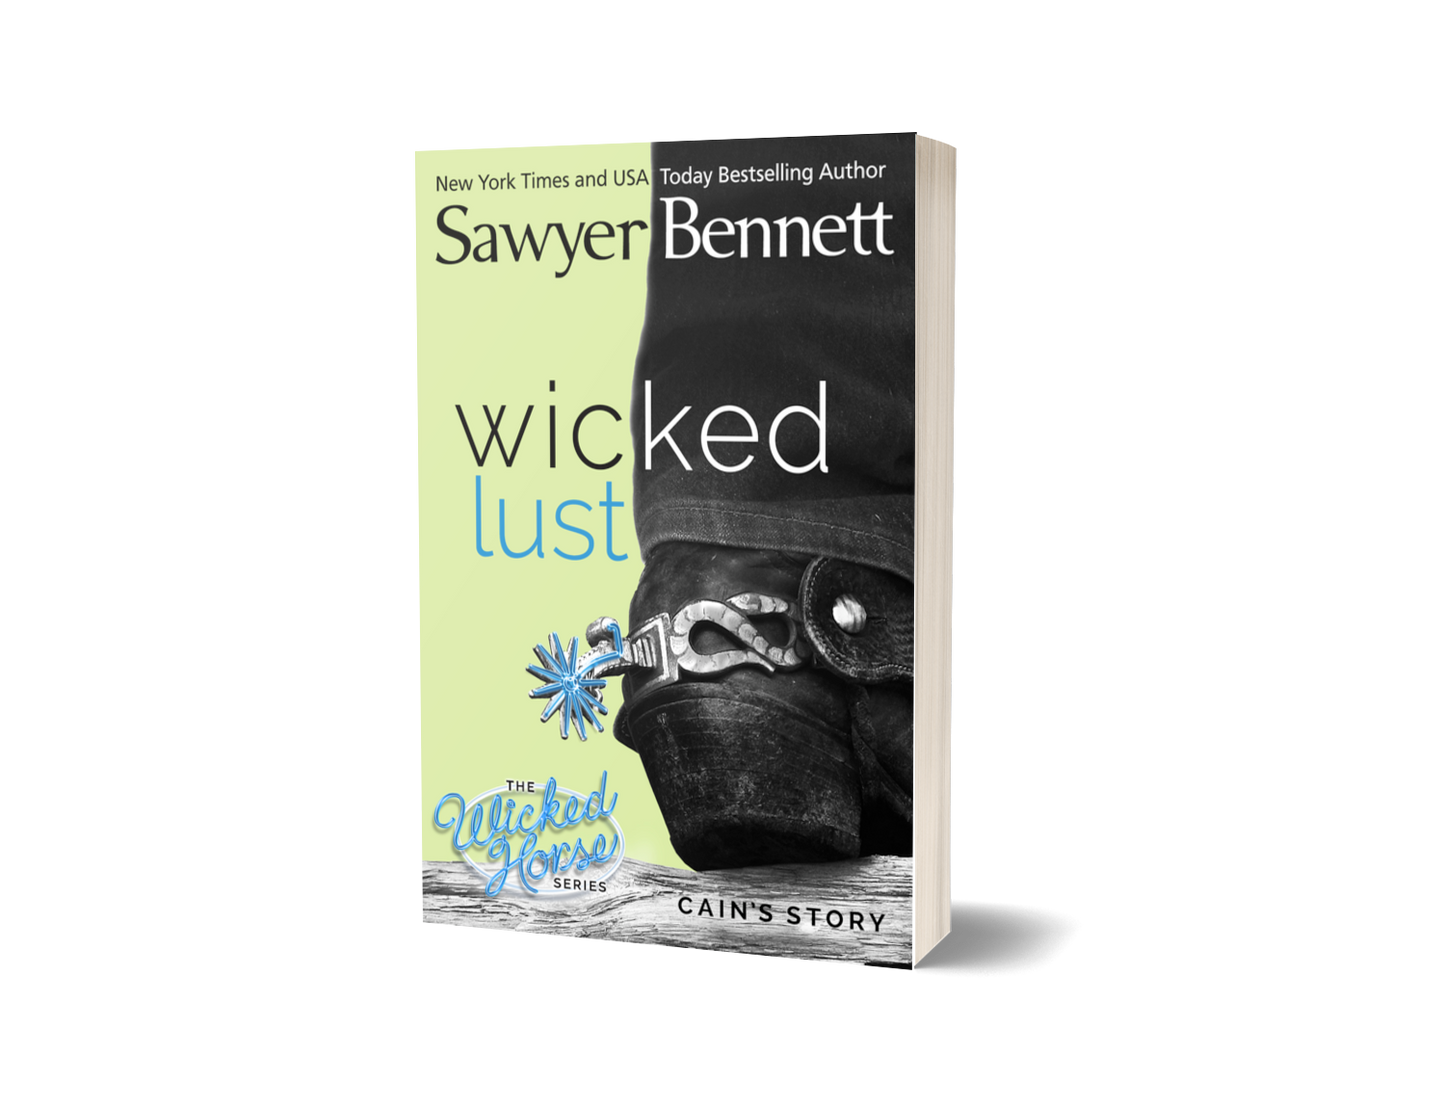 Wicked Lust - Signed Paperback (ALTERNATE COVER) - Sawyer Bennett